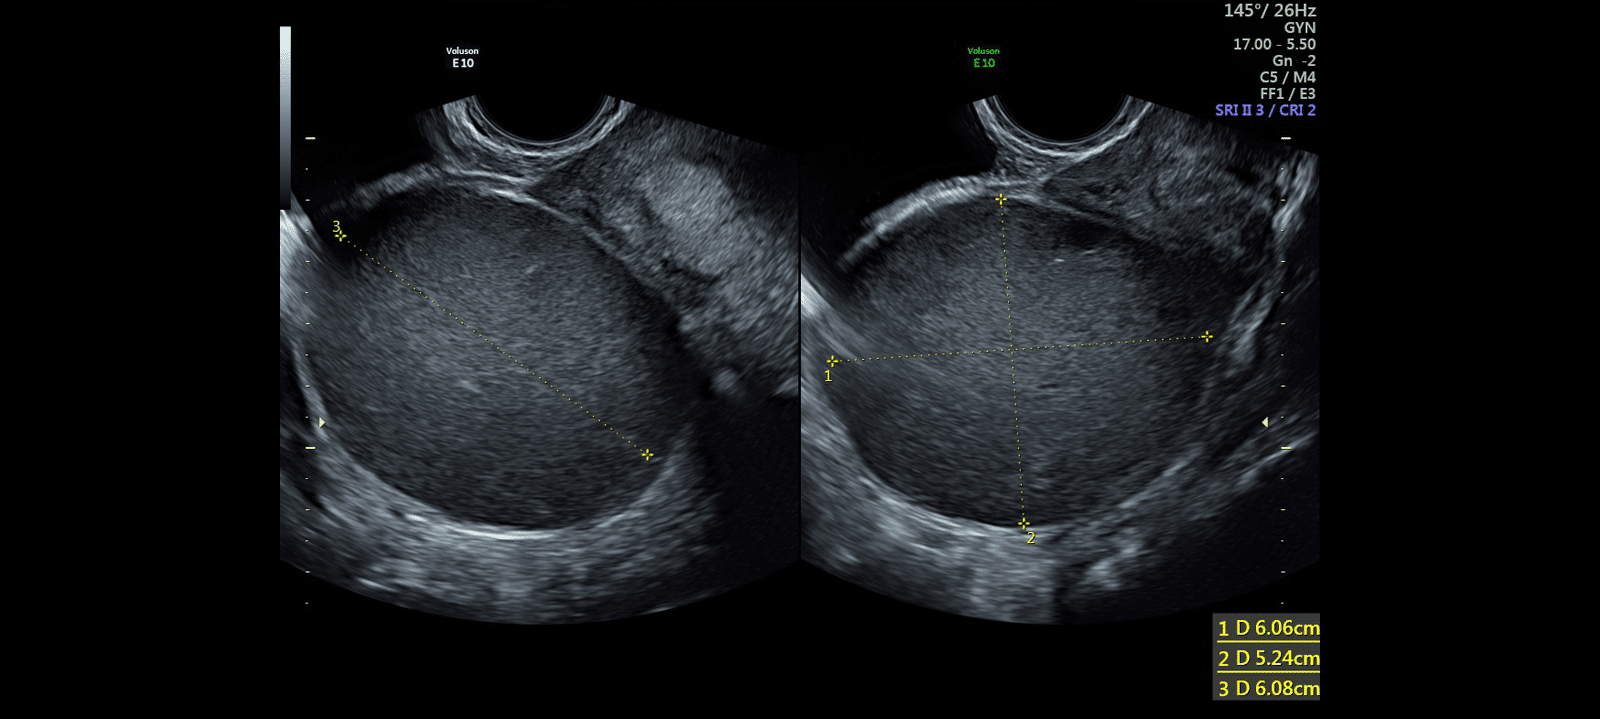 Endometriosis Ultrasound & Staging